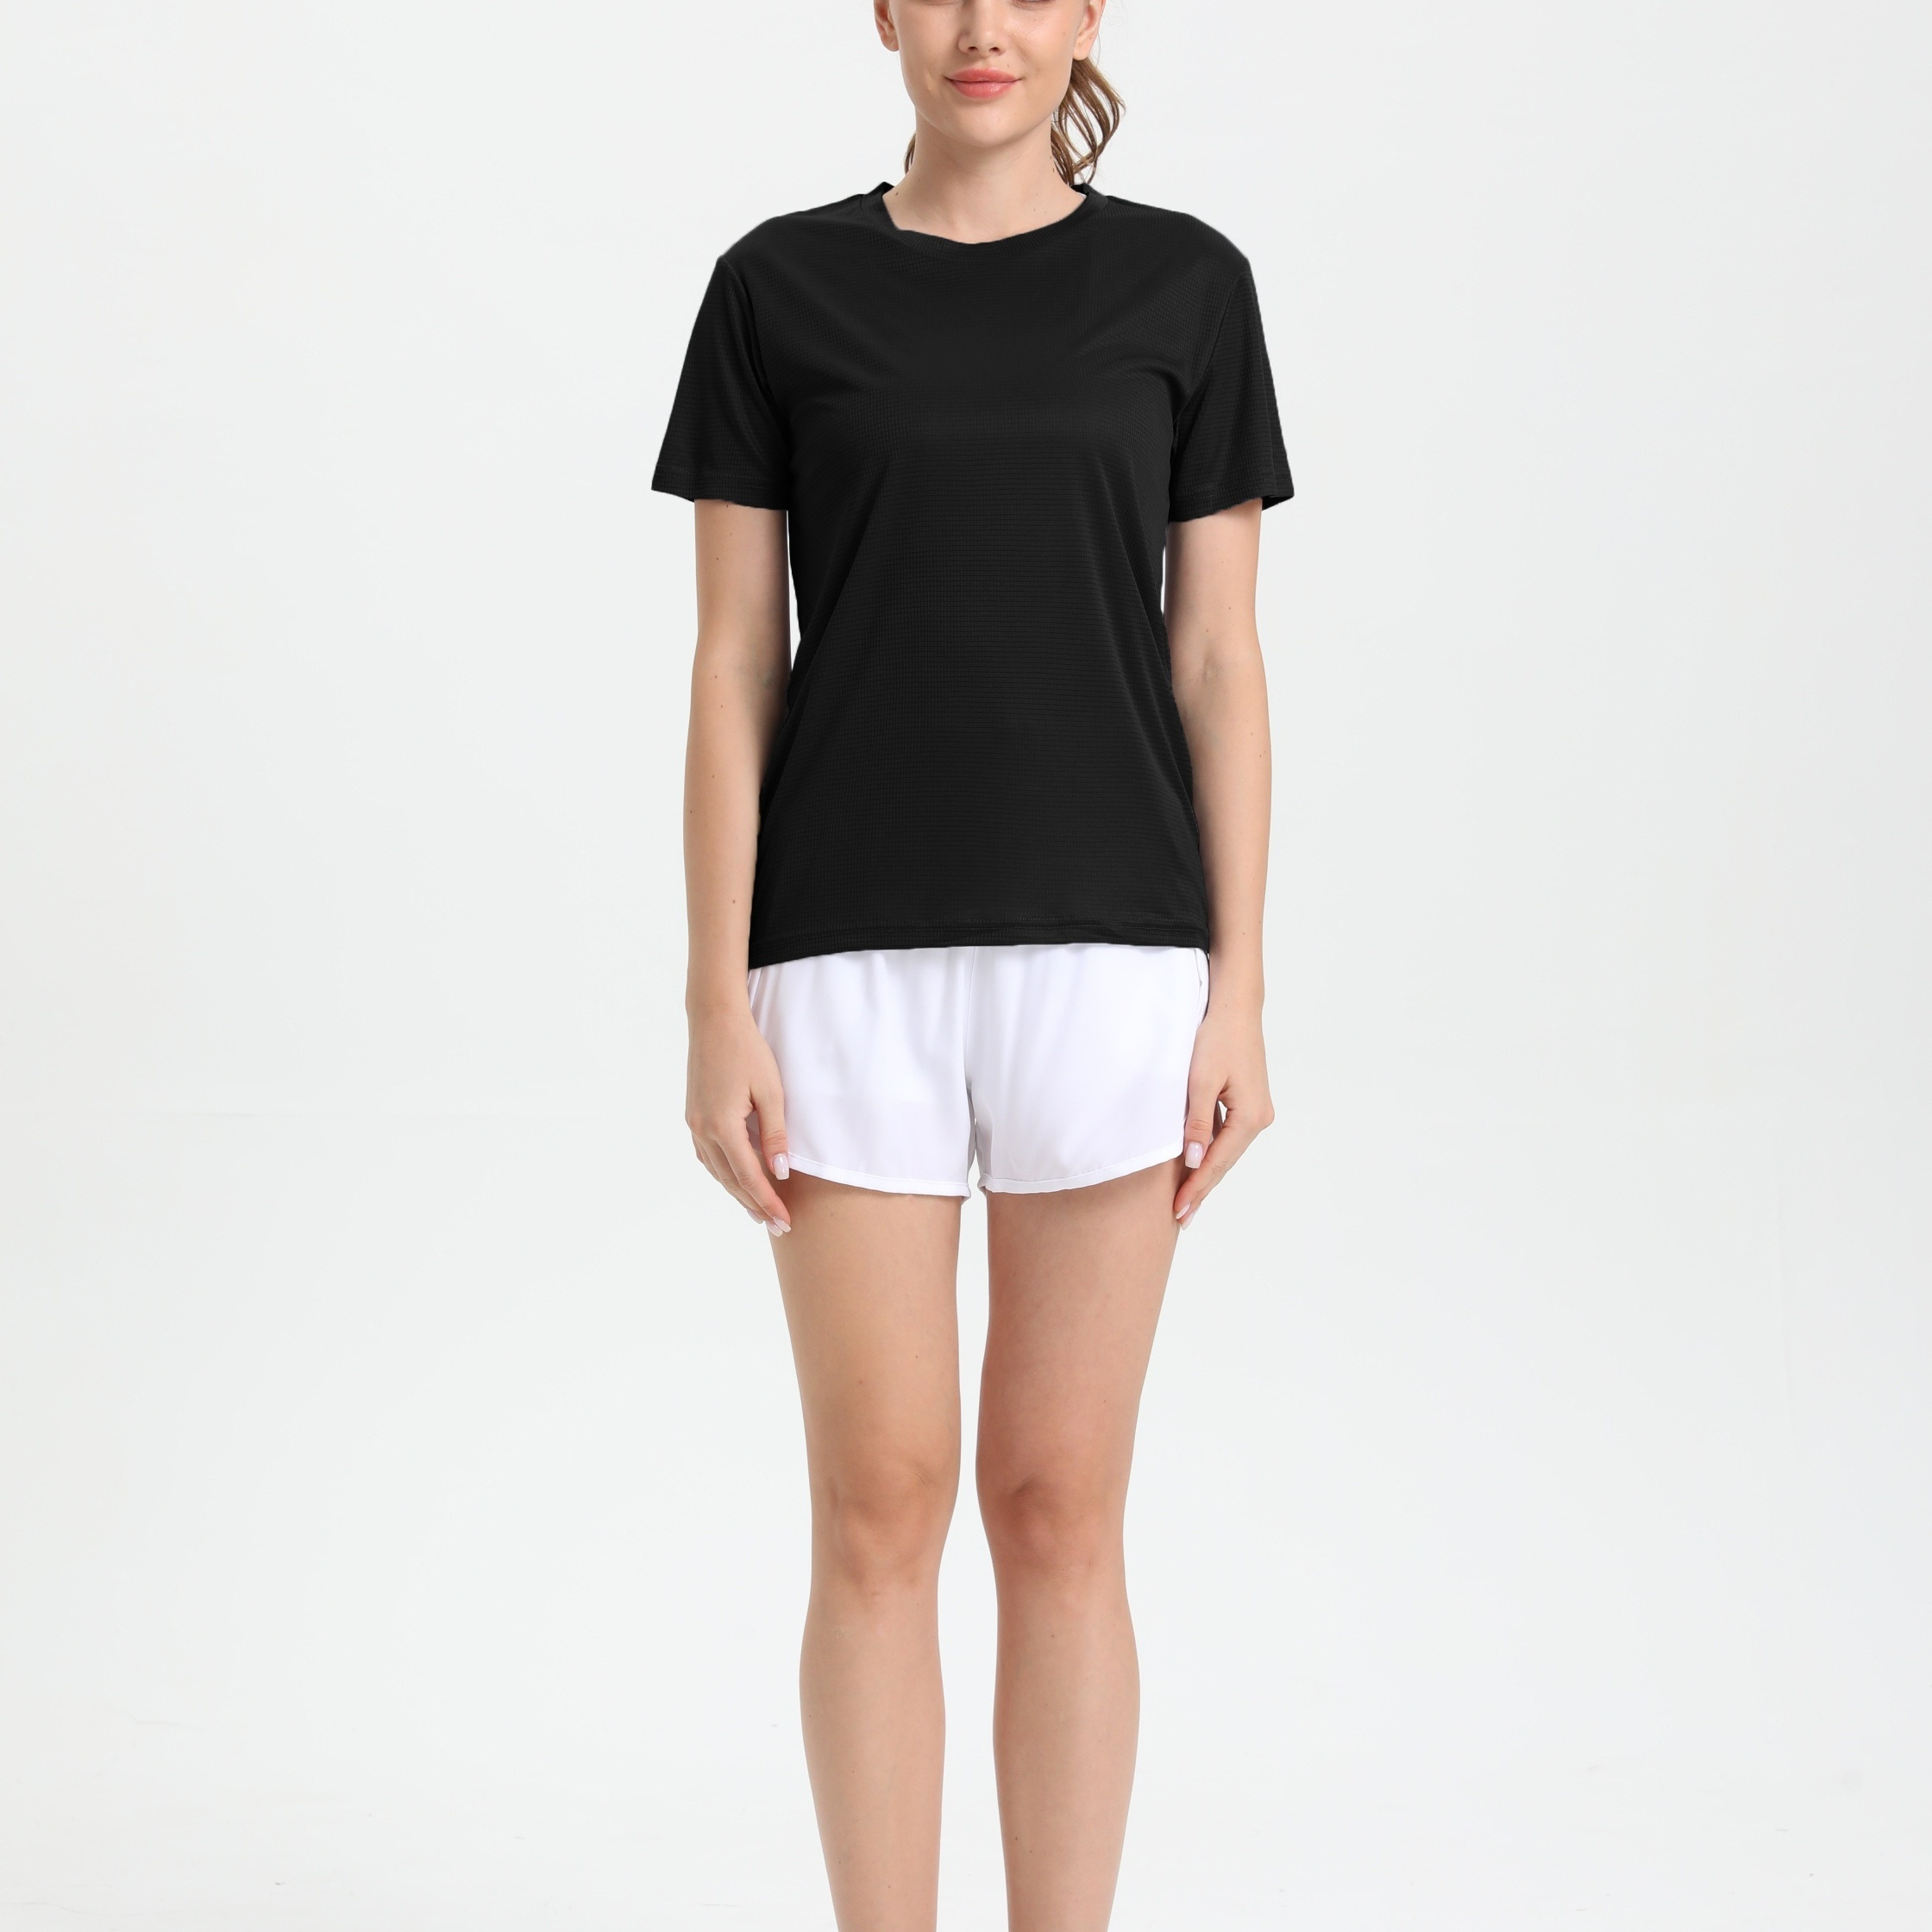 Women's Slim Fit Workout Tops Short Sleeve T-shirt Quick Dry Built